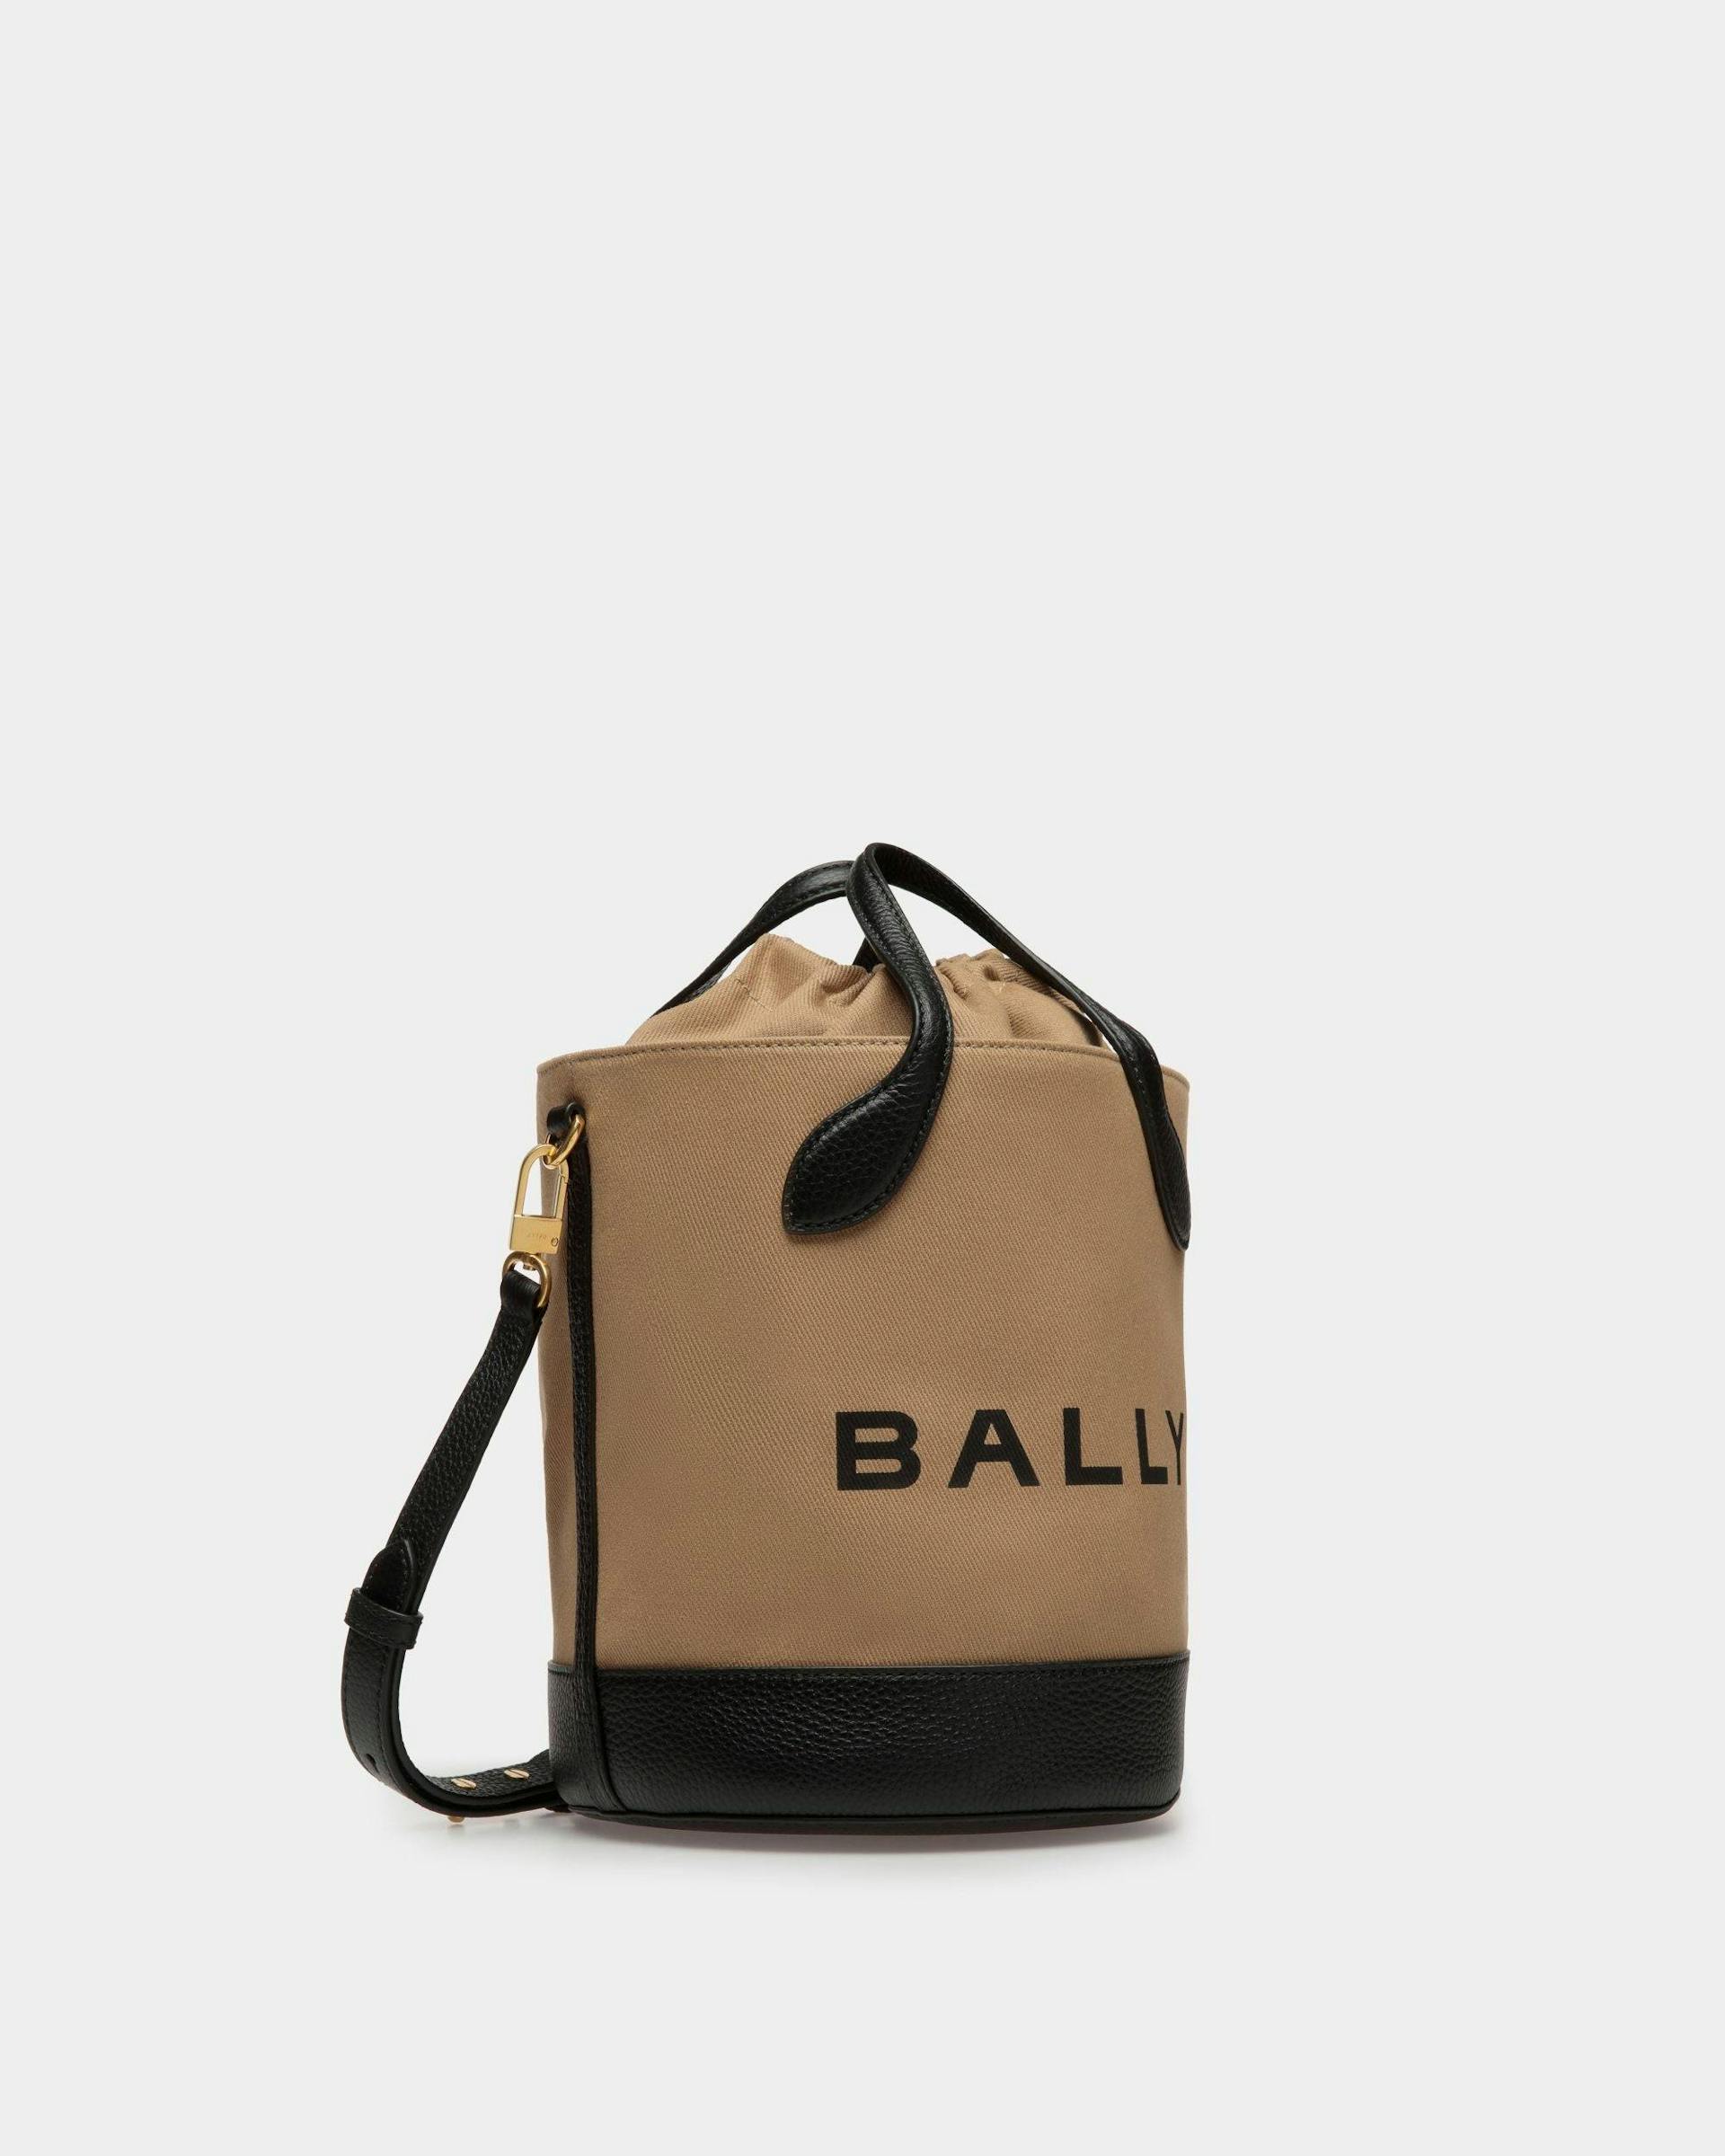 Bar 8 Hours | Women's Bucket Bag | Sand And Black Fabric | Bally